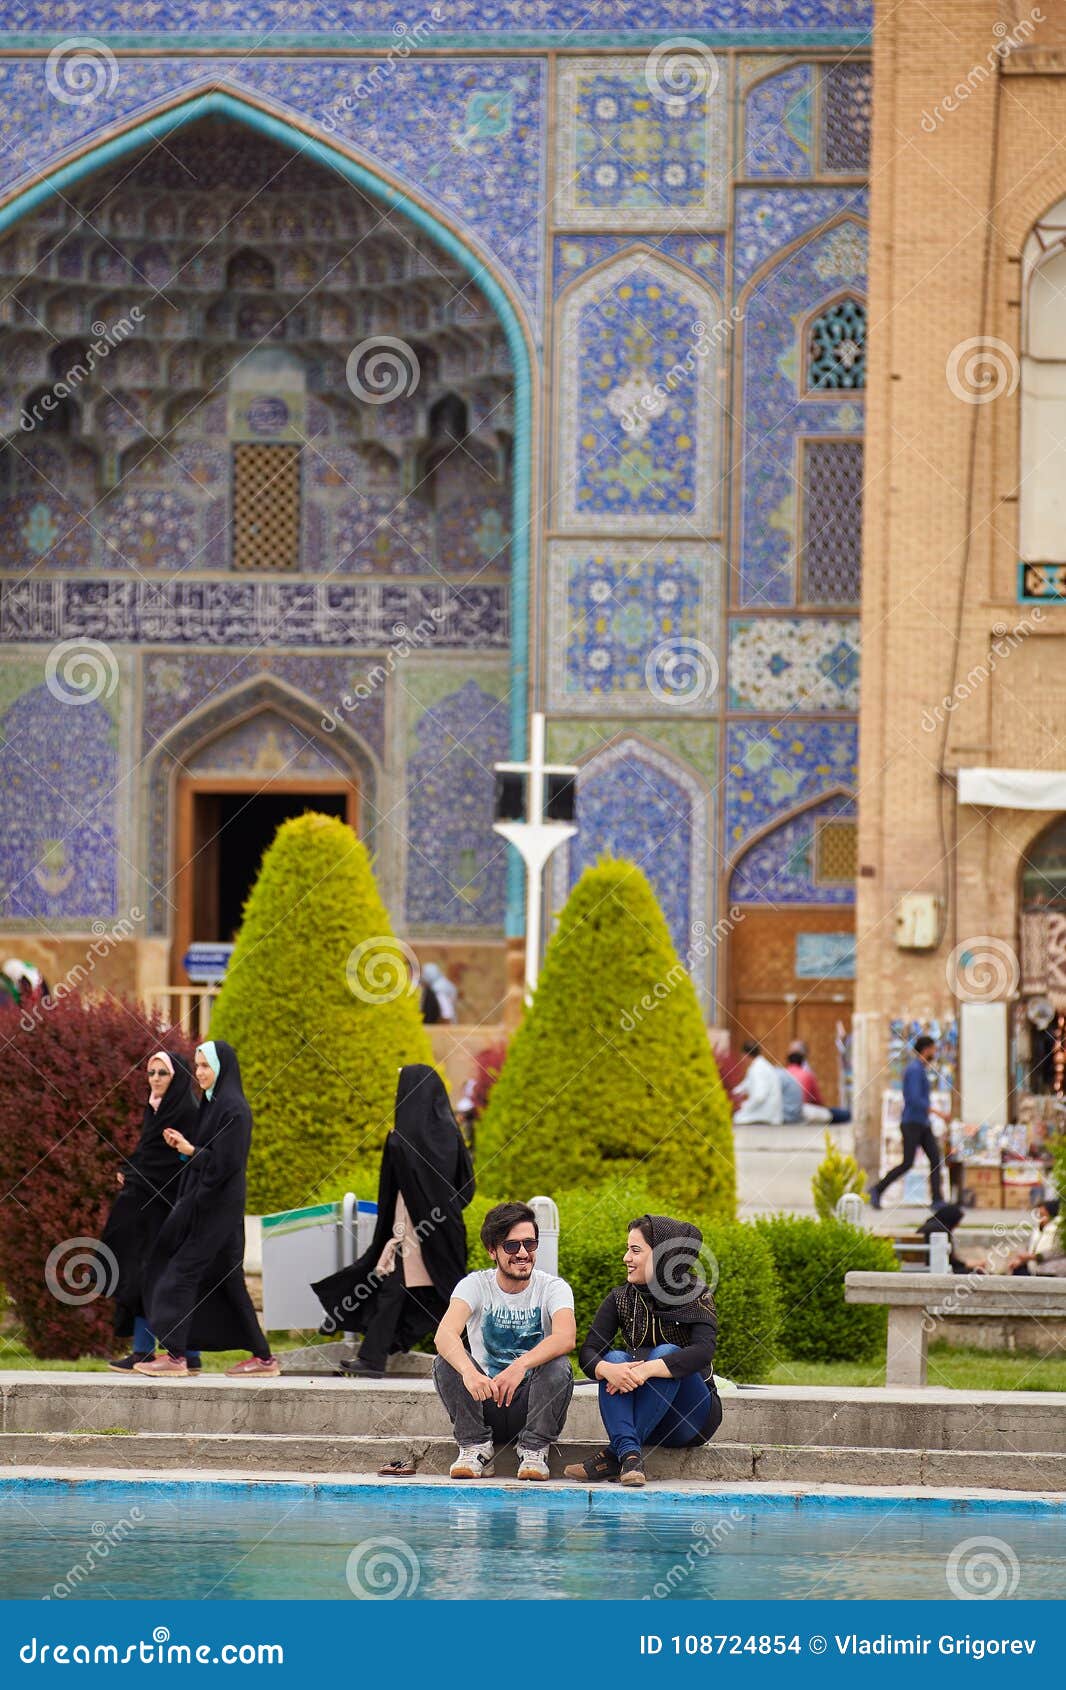 Ukrainian dating sites in Isfahan